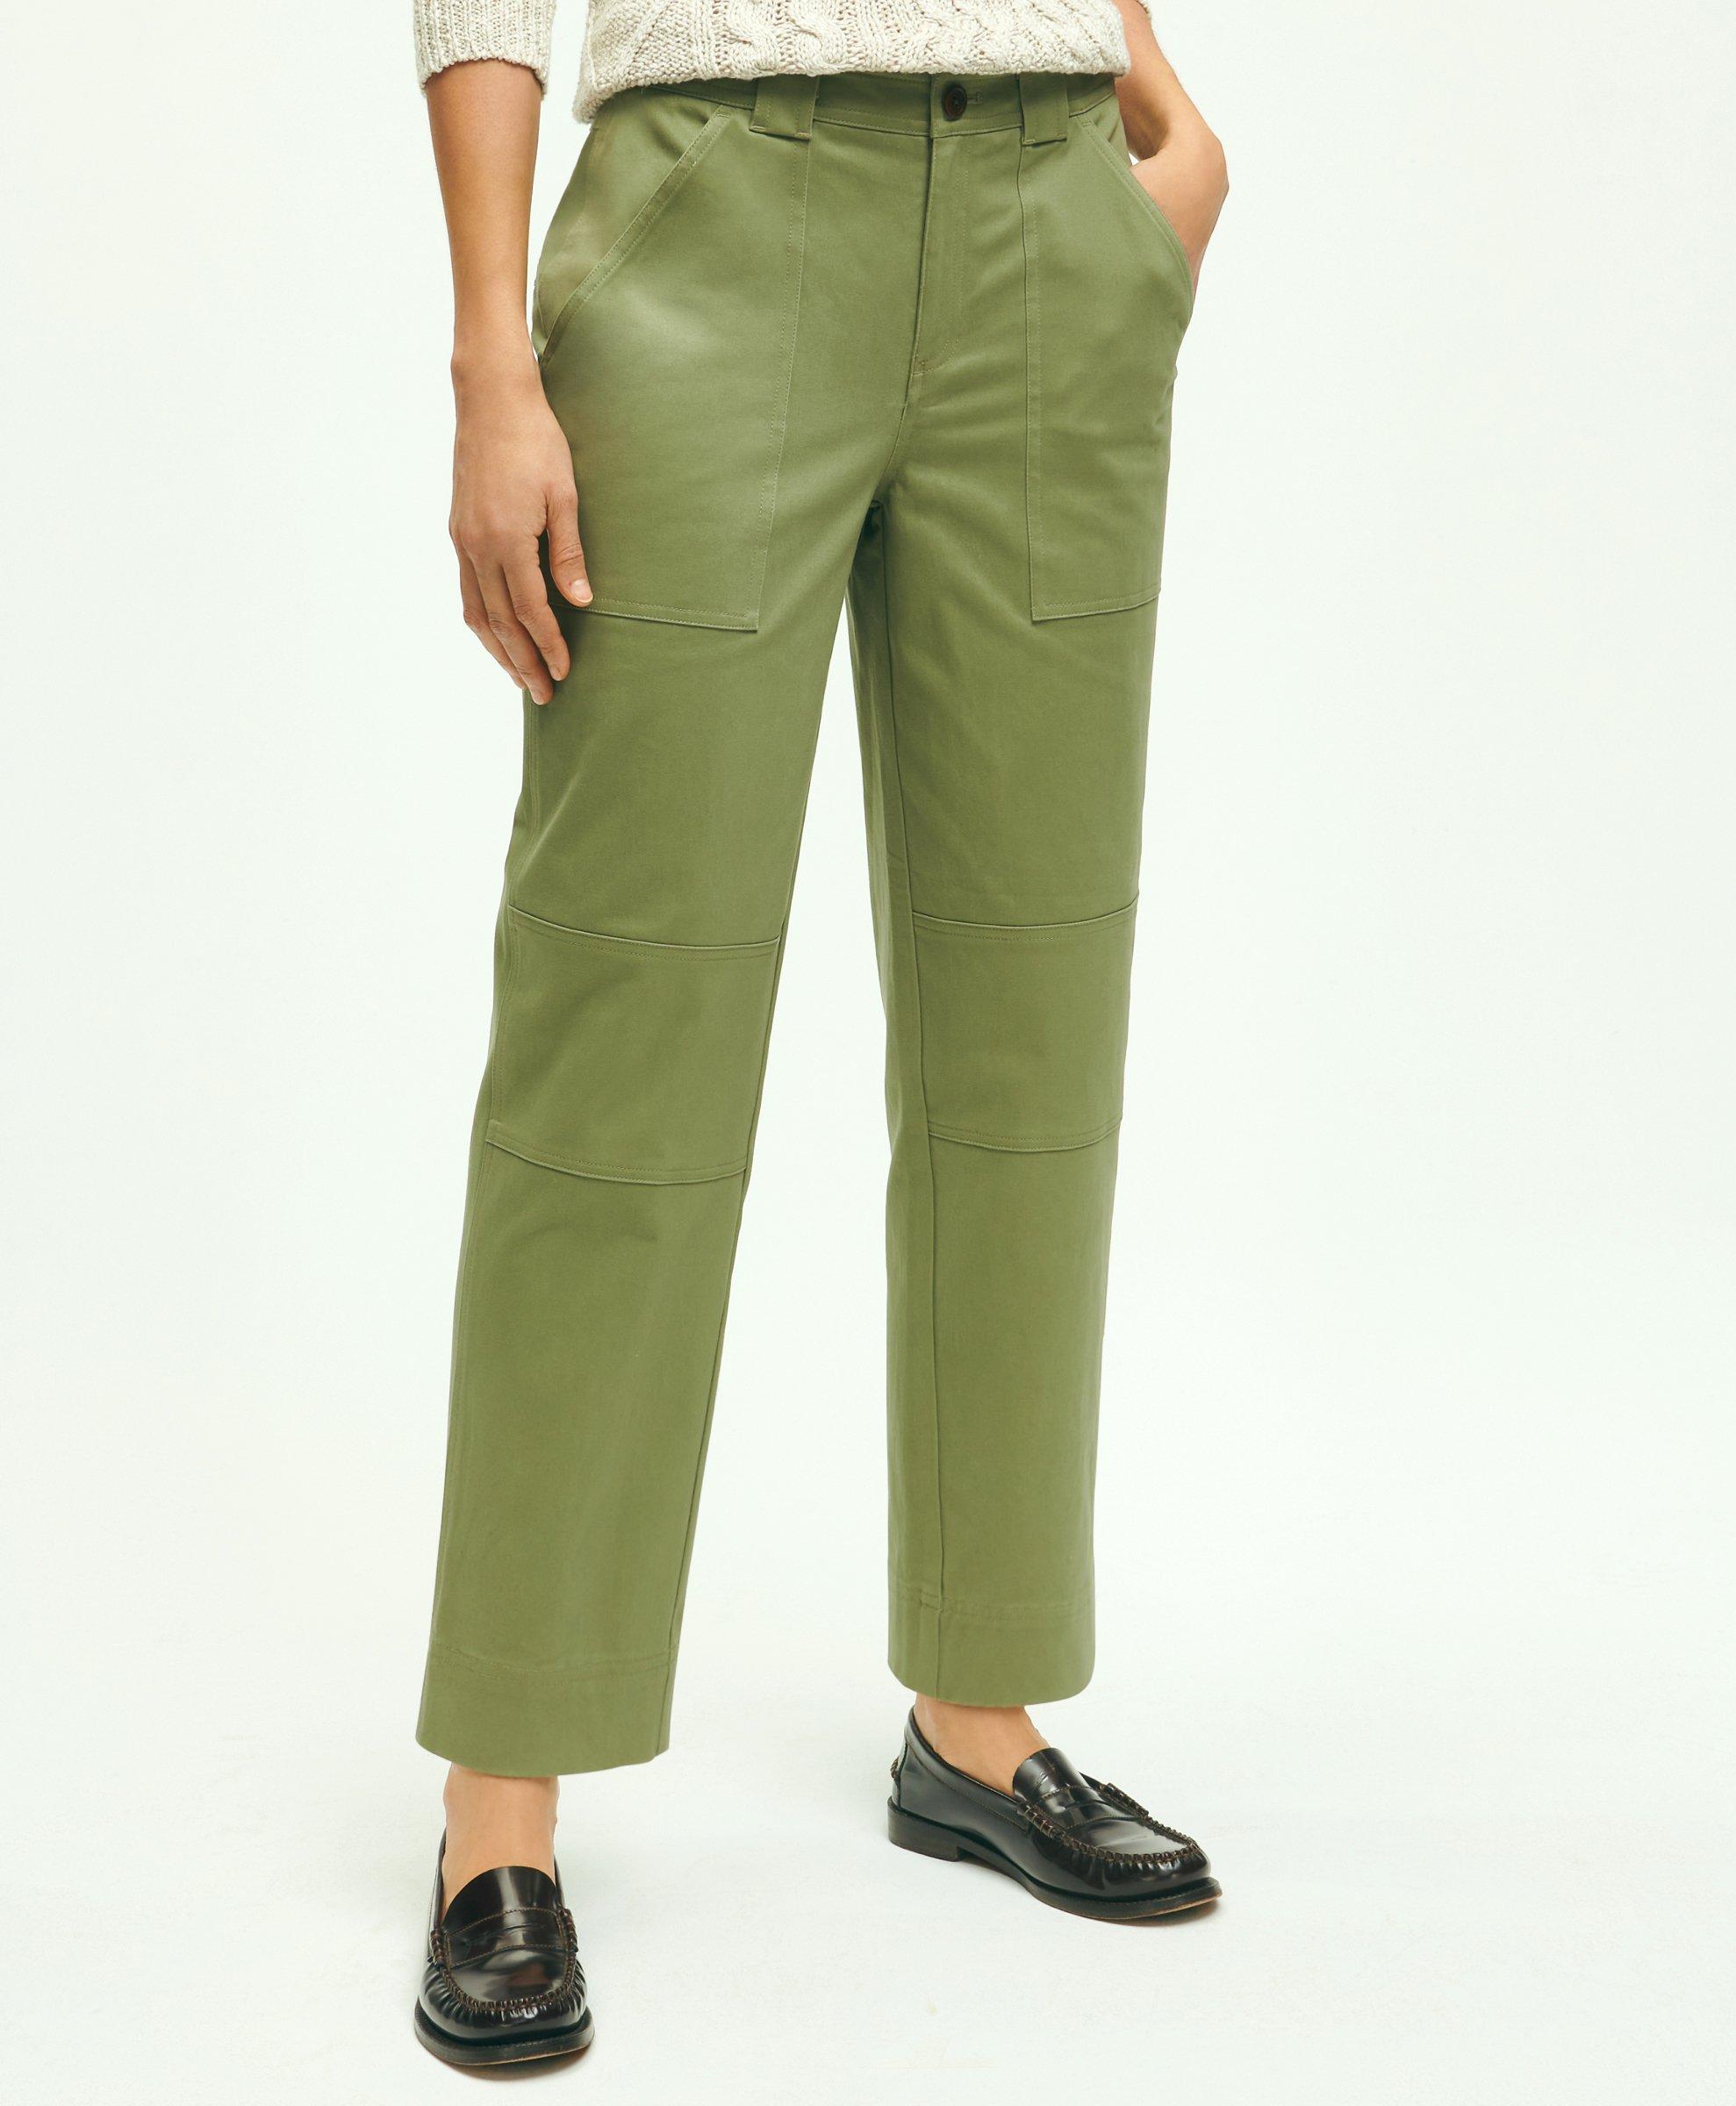 Green Women's Pants